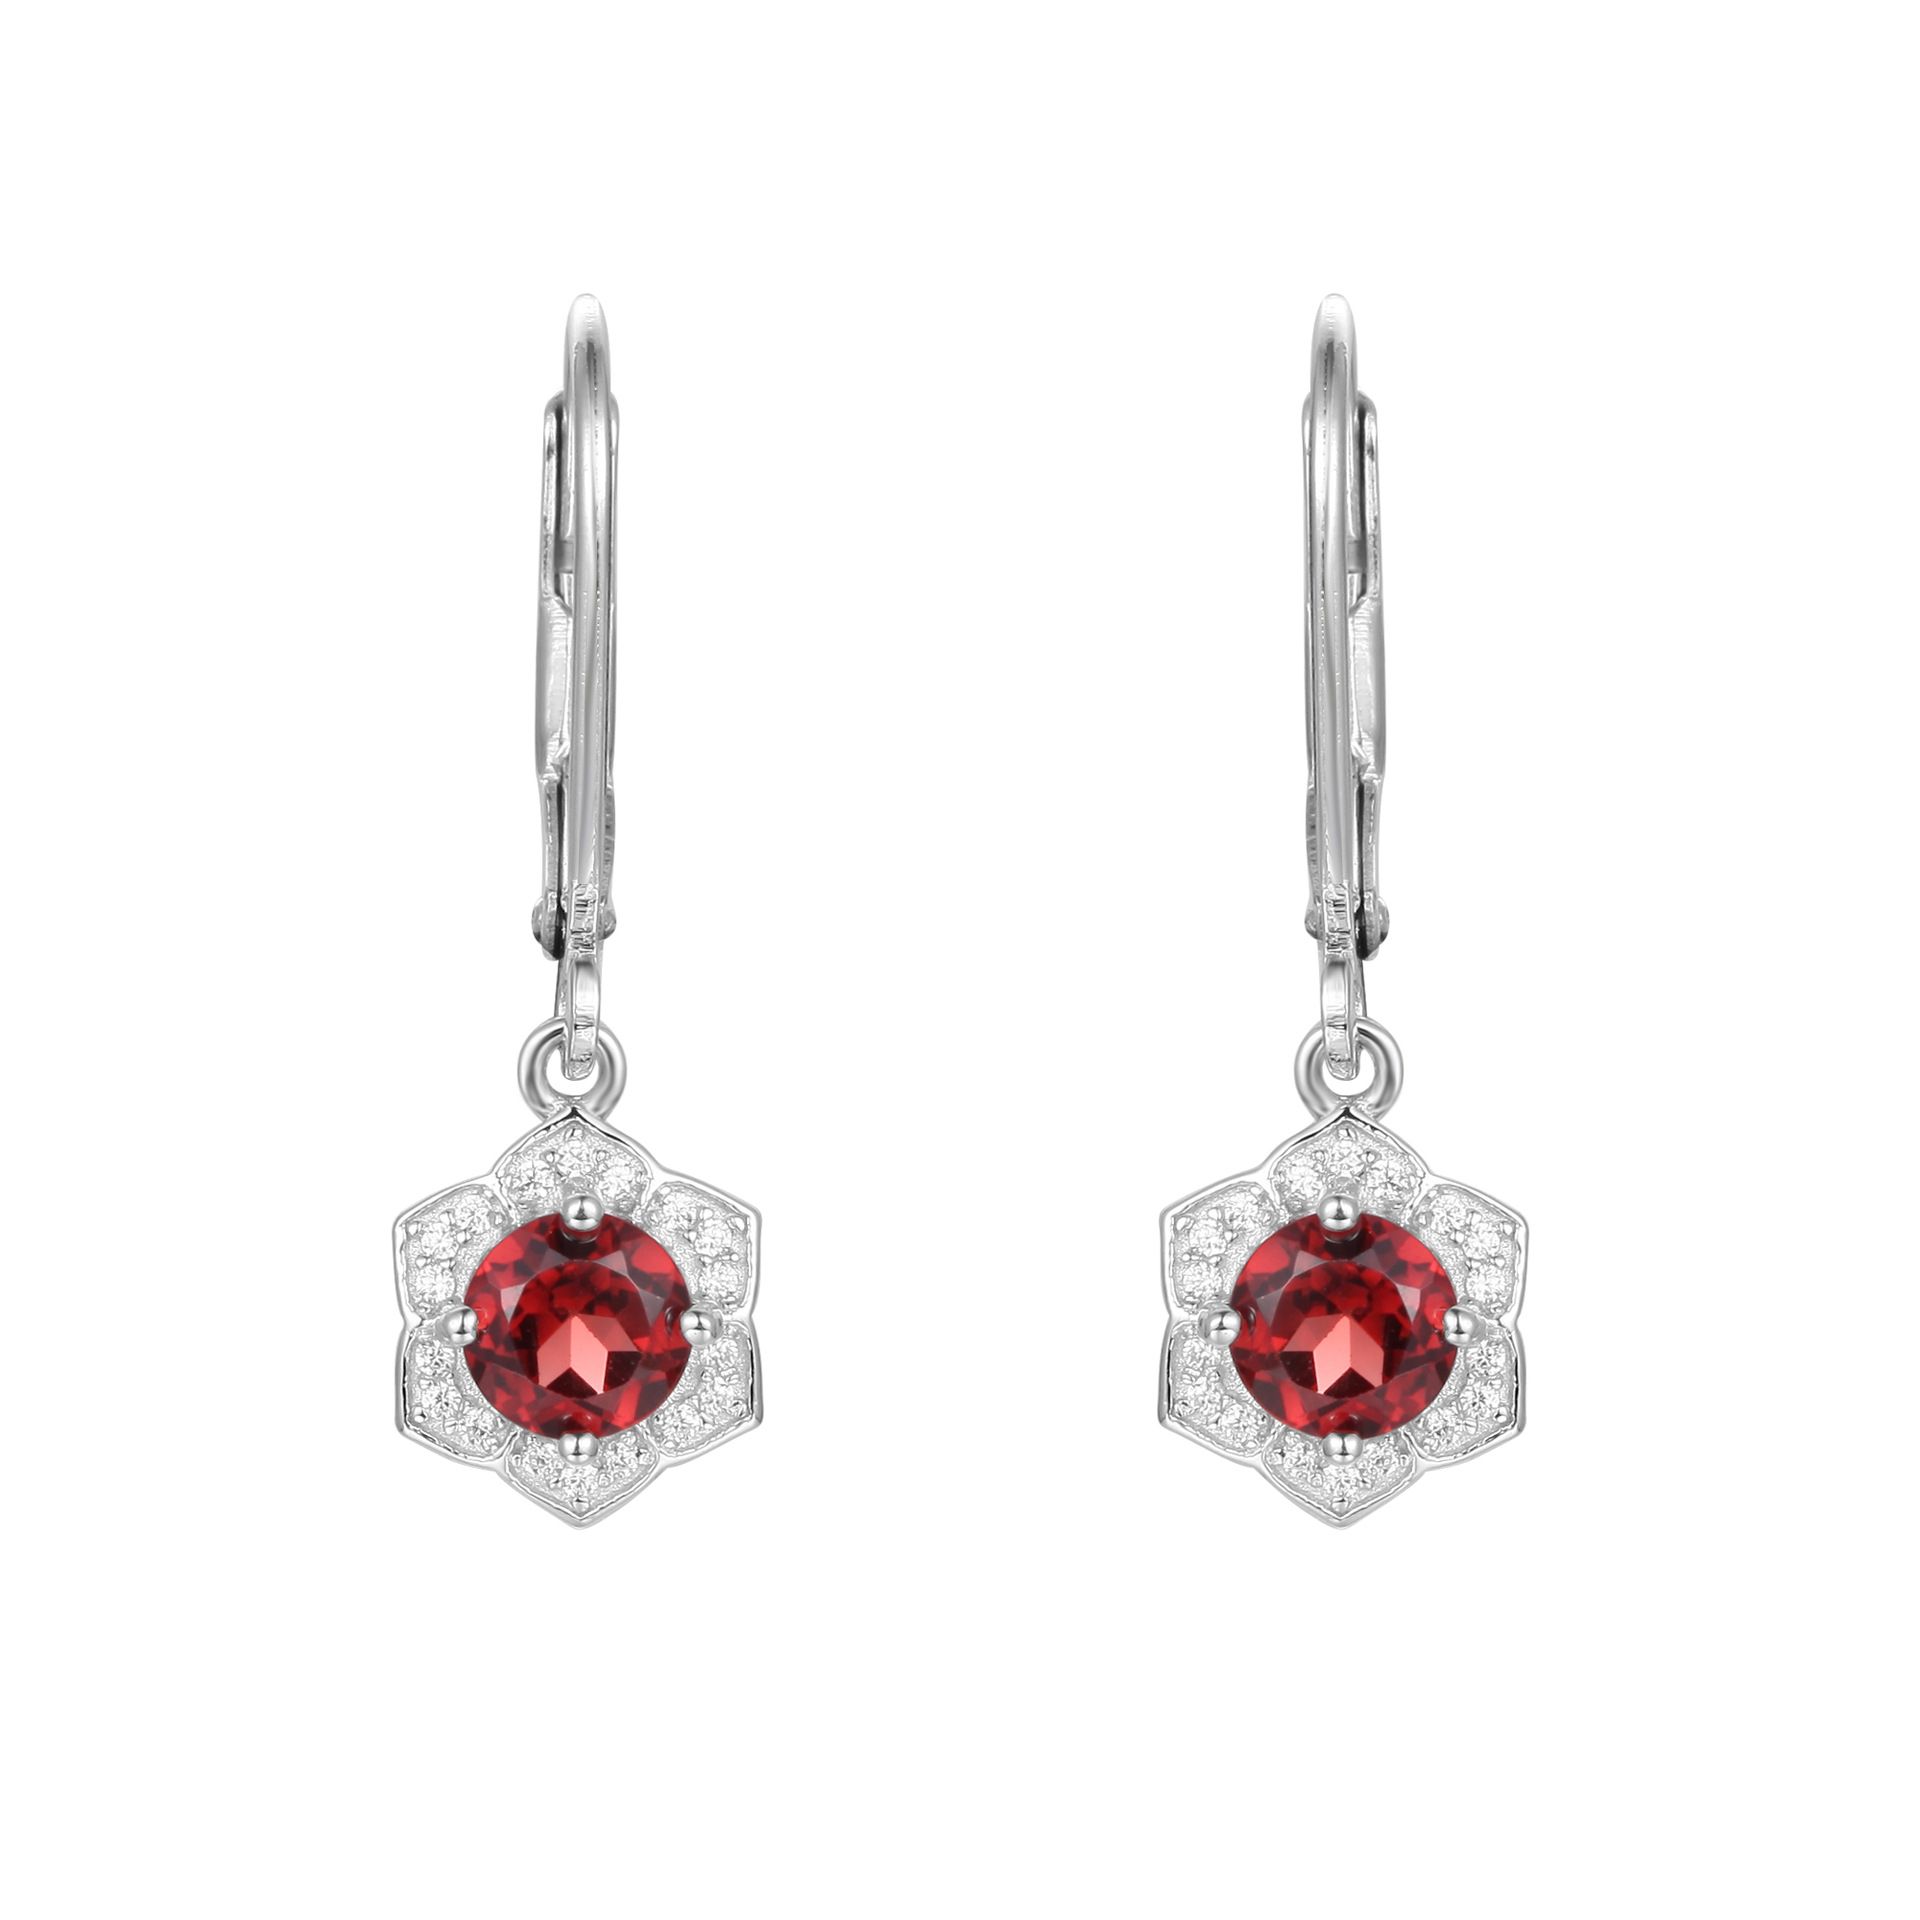 Luxury hexagonal surround S925 sterling silver earrings-BlingRunway